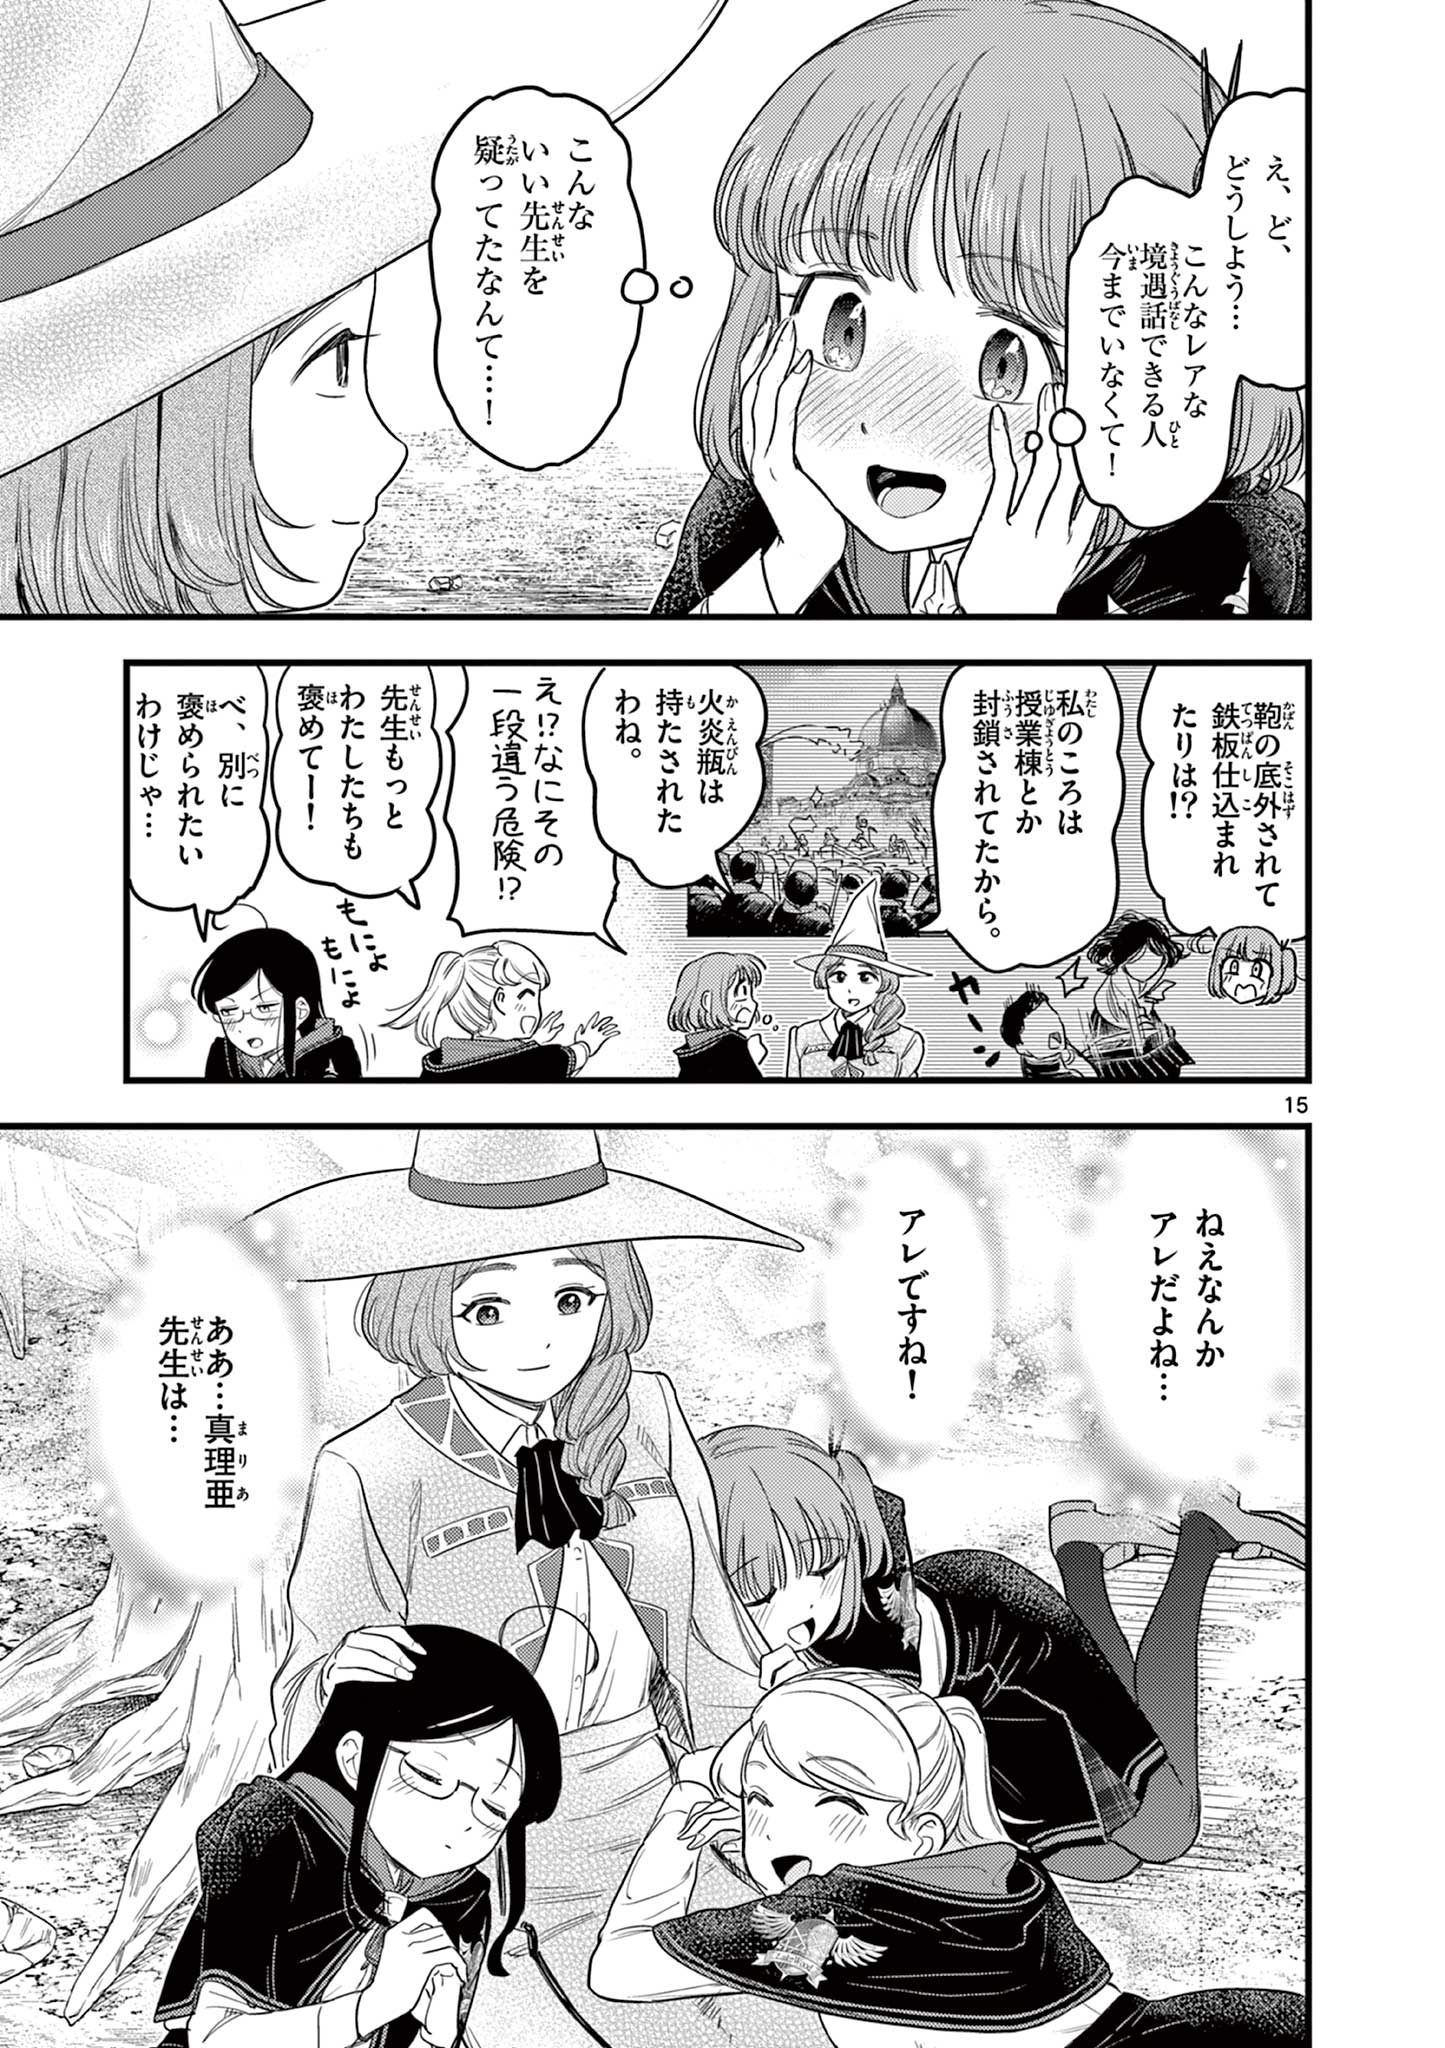 Kuro Mahou Ryou no Sanakunin - Chapter 7 - Page 15